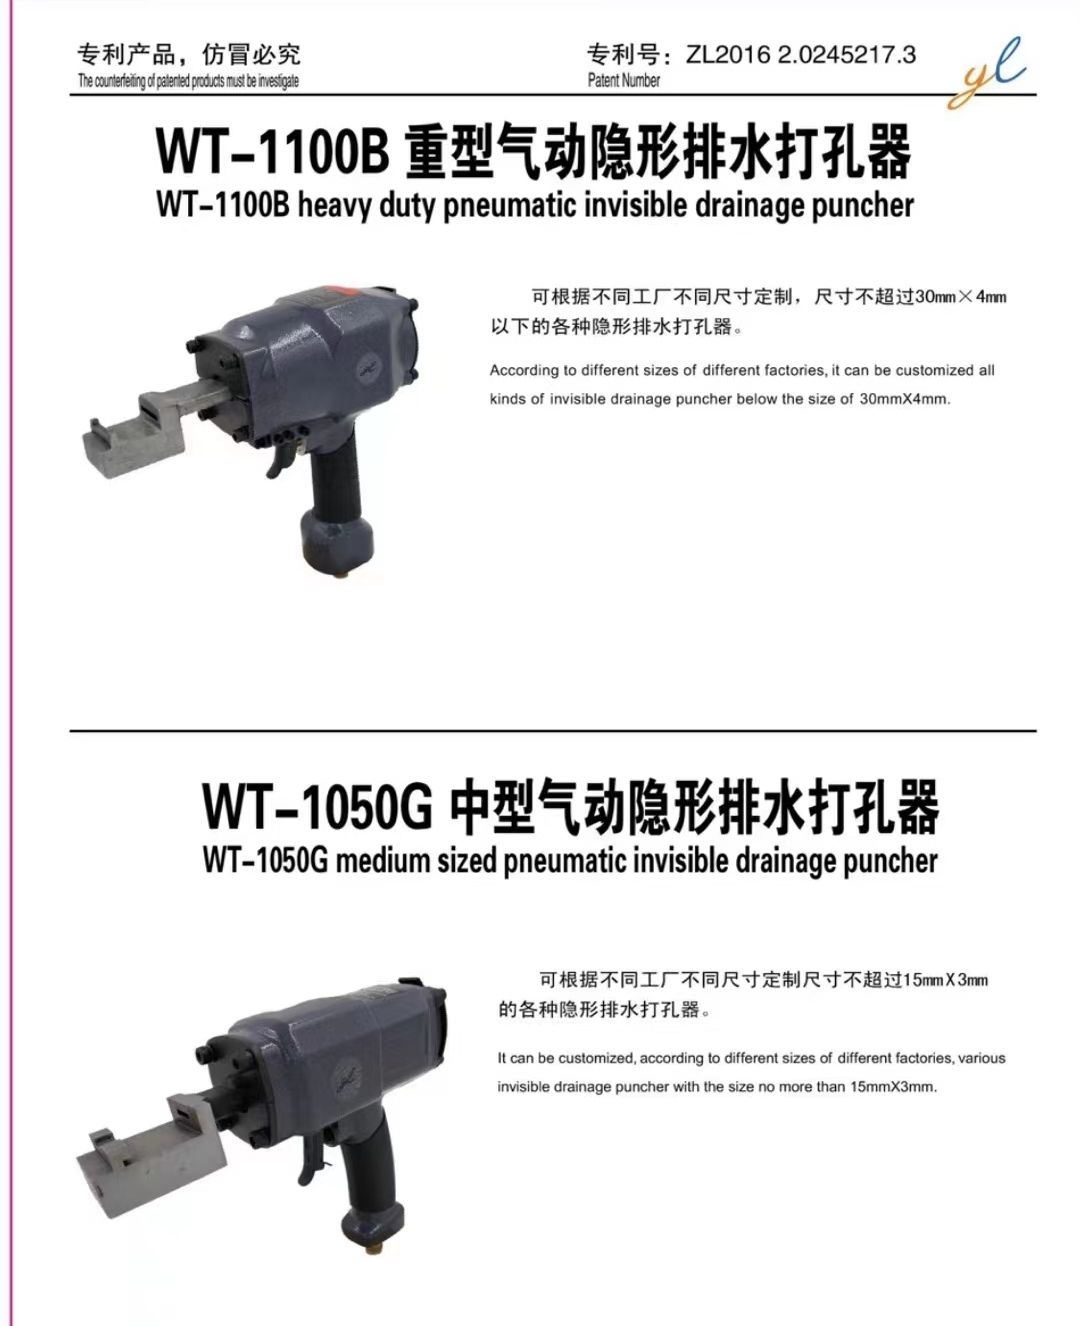 COTV全球直播-杭州亚良气动工具有限公司研发生产销售五金气动工具系列产品，欢迎大家光临！